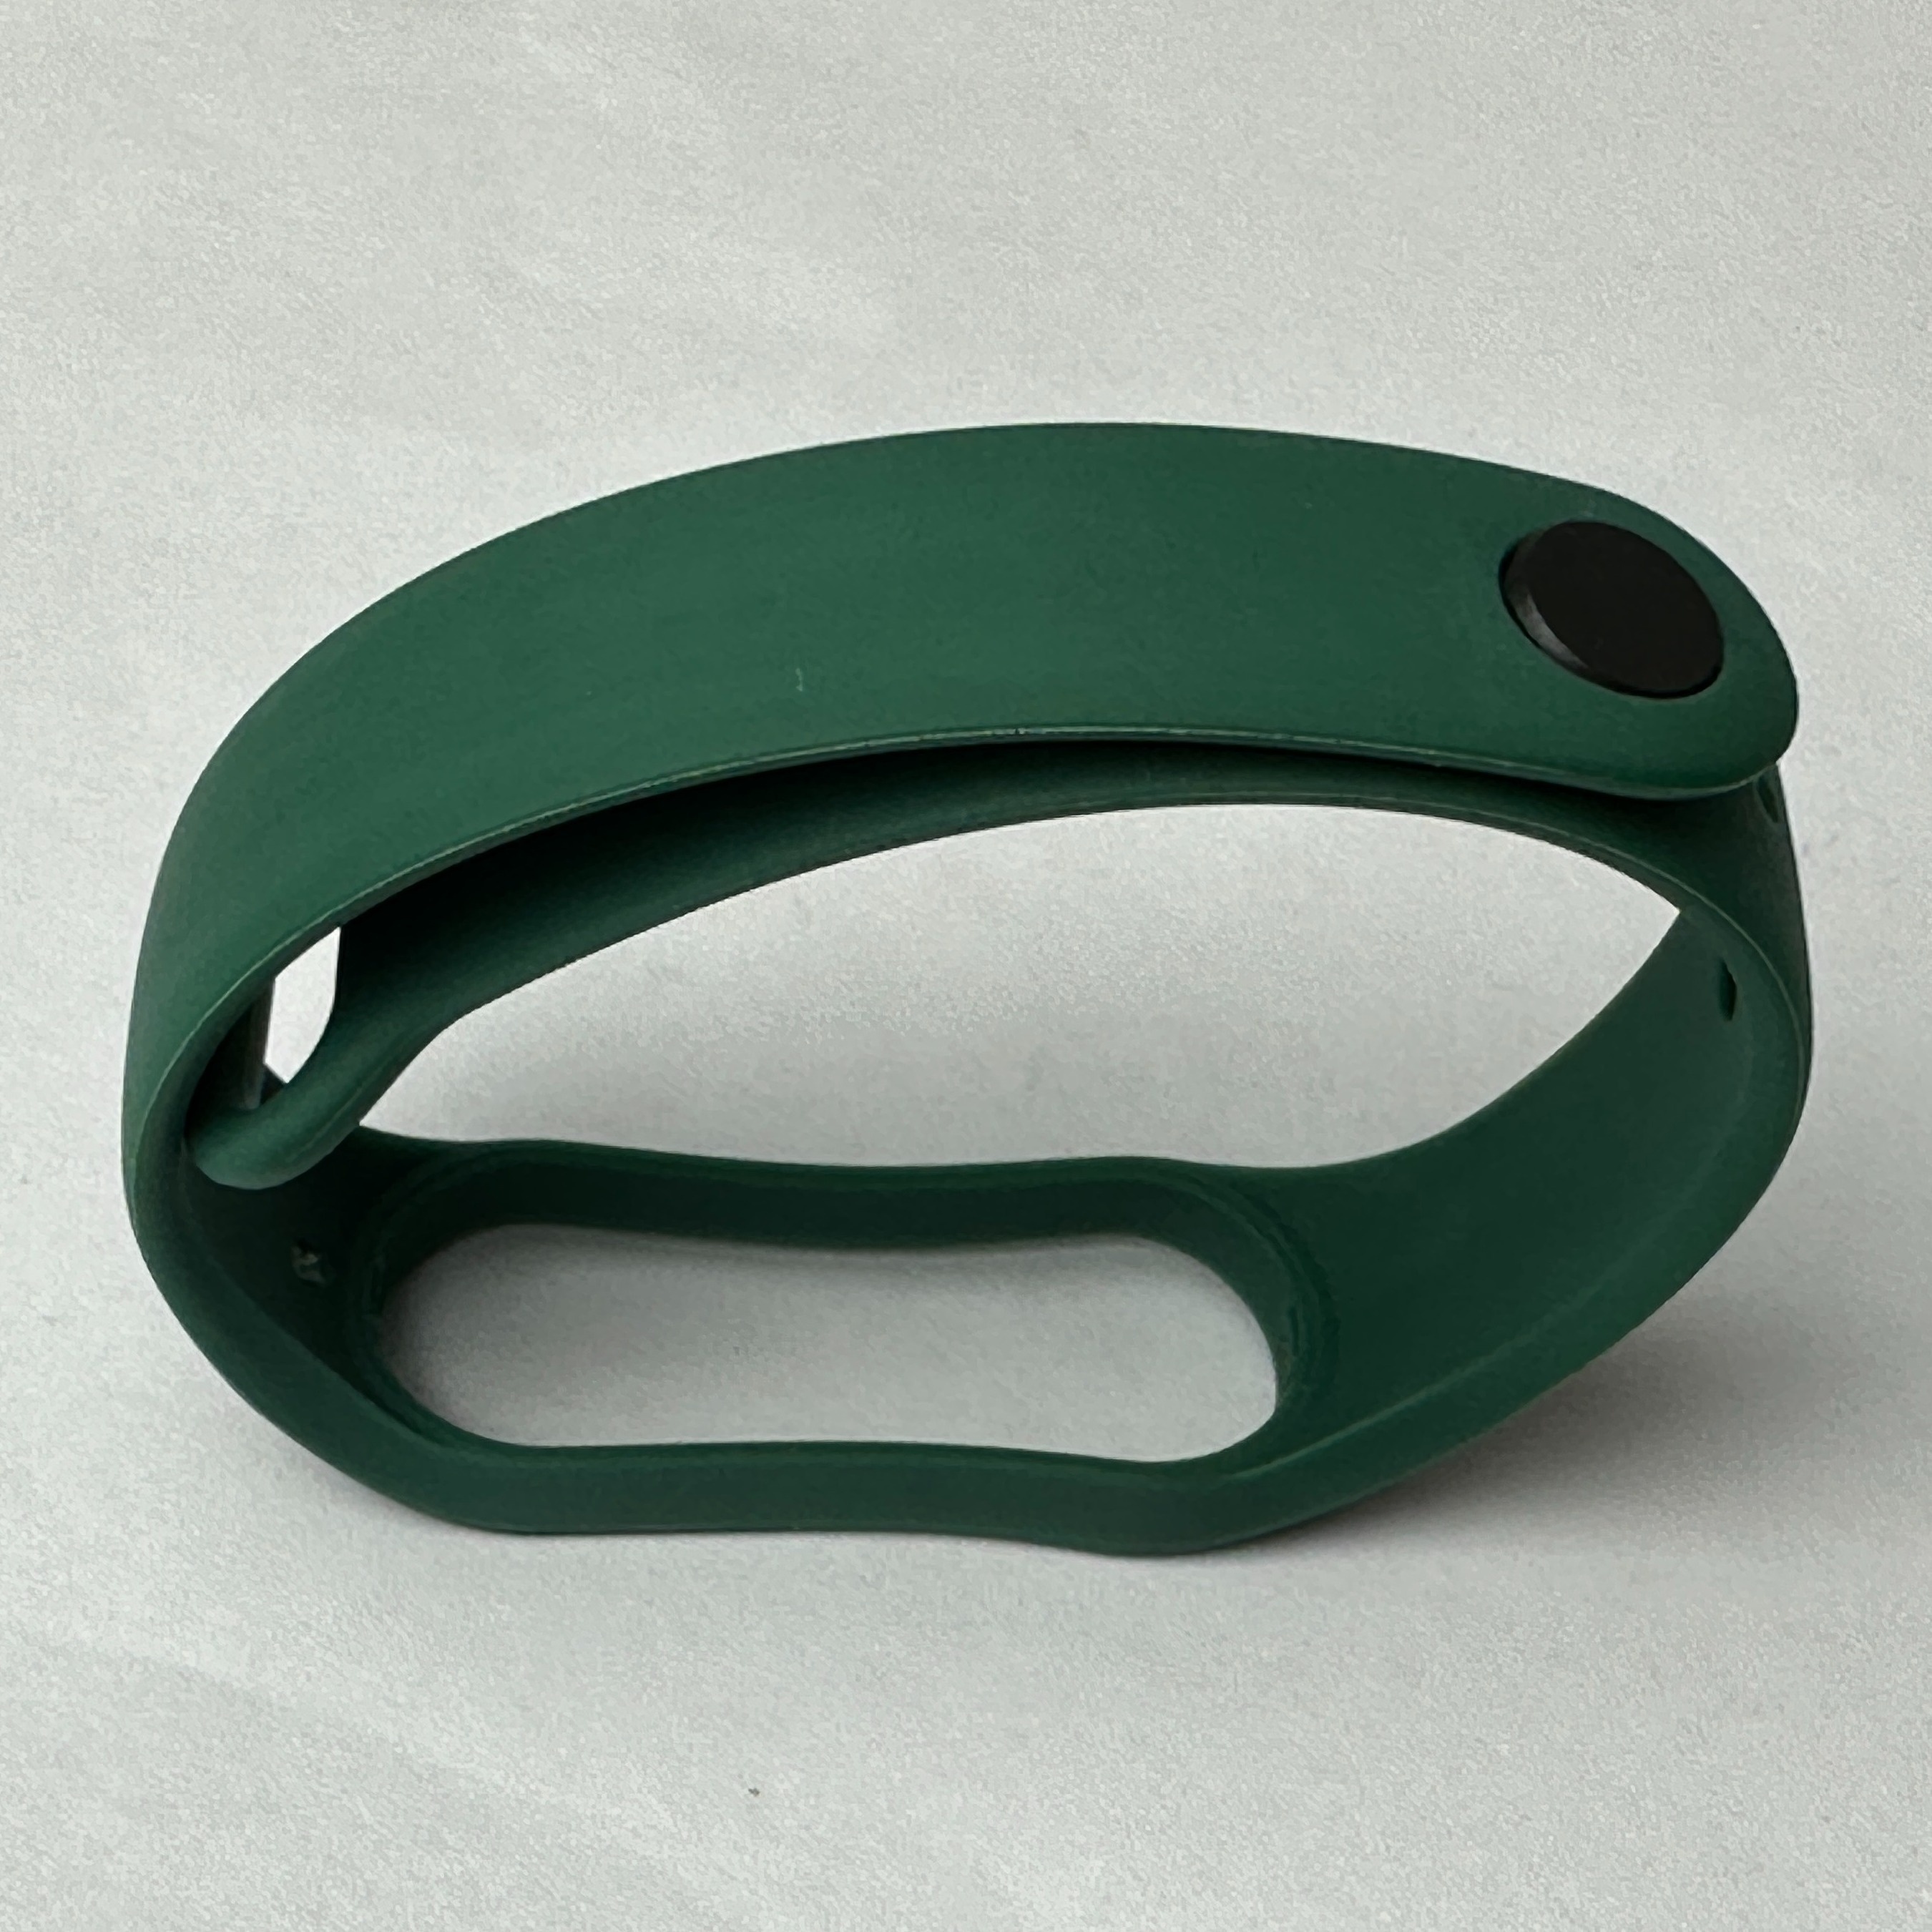 Sport Silicone Bracelet Strap for xiaomi Mi band 7 6 3 4 5 correa Wristband